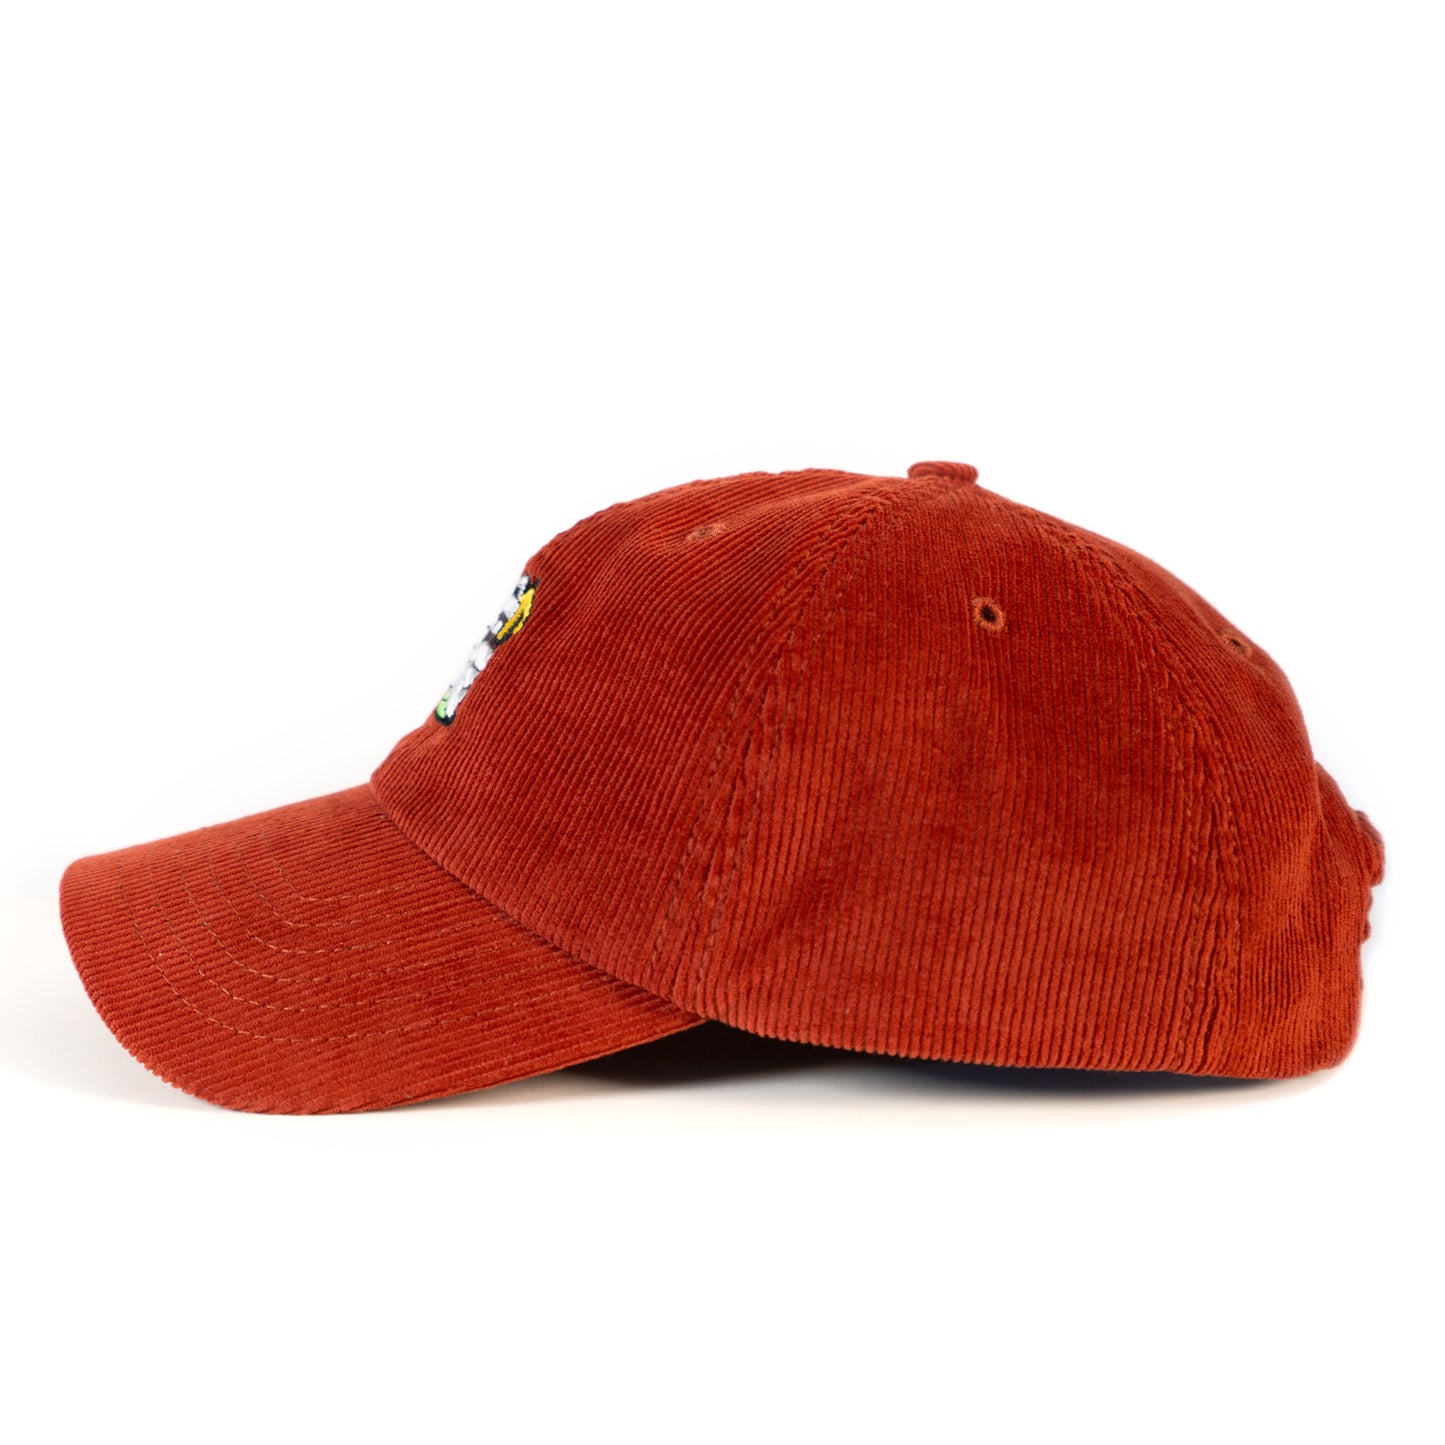 Garbage Collector (rust corduroy hat)